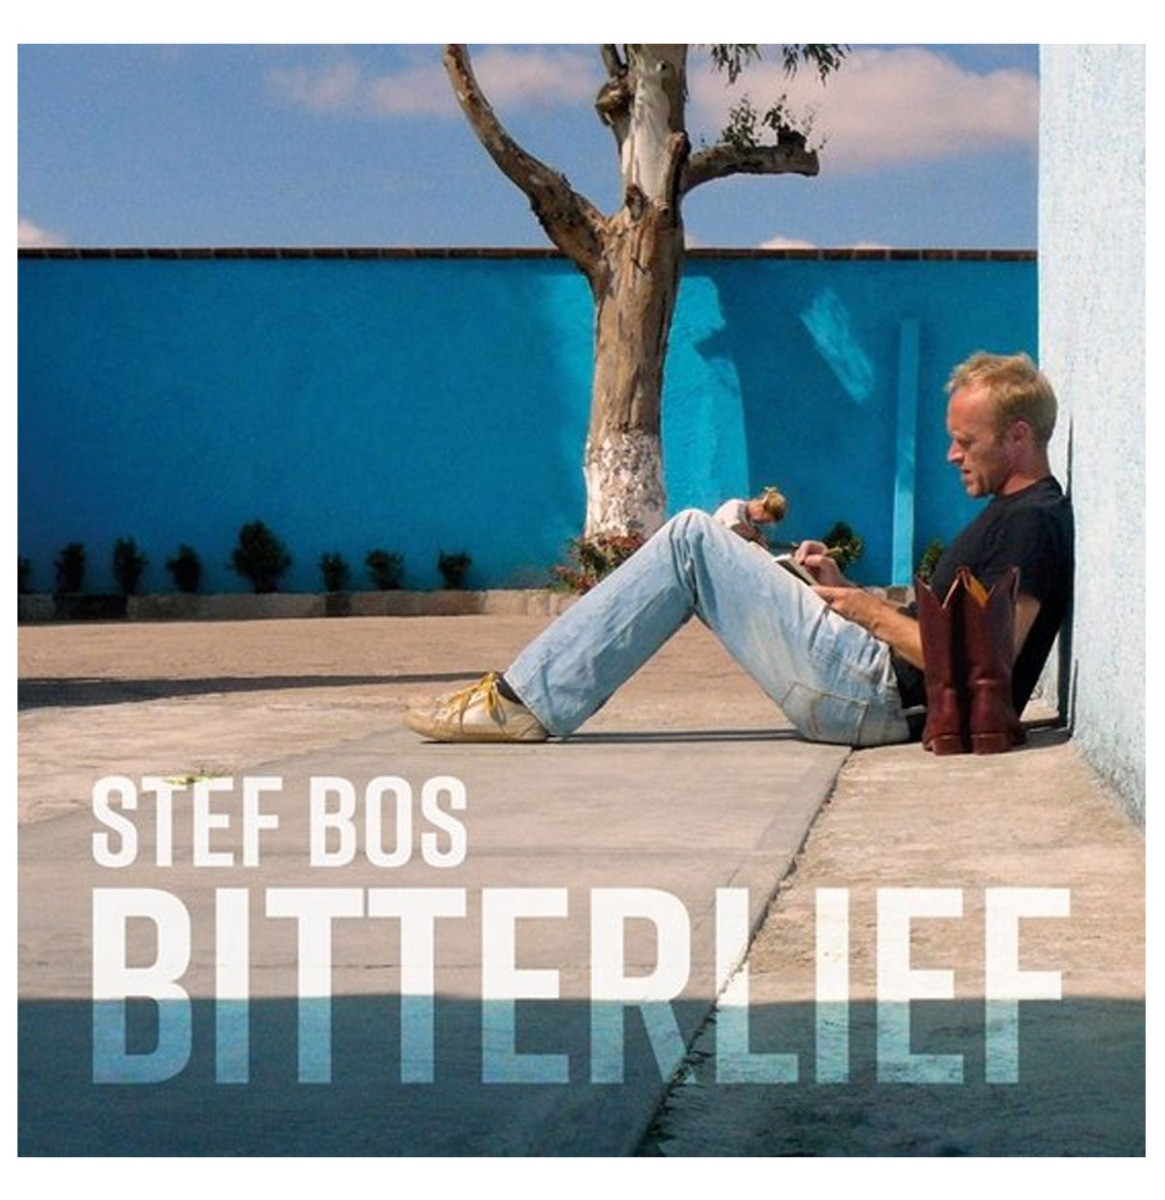 Stef Bos - Bitterlief LP & CD